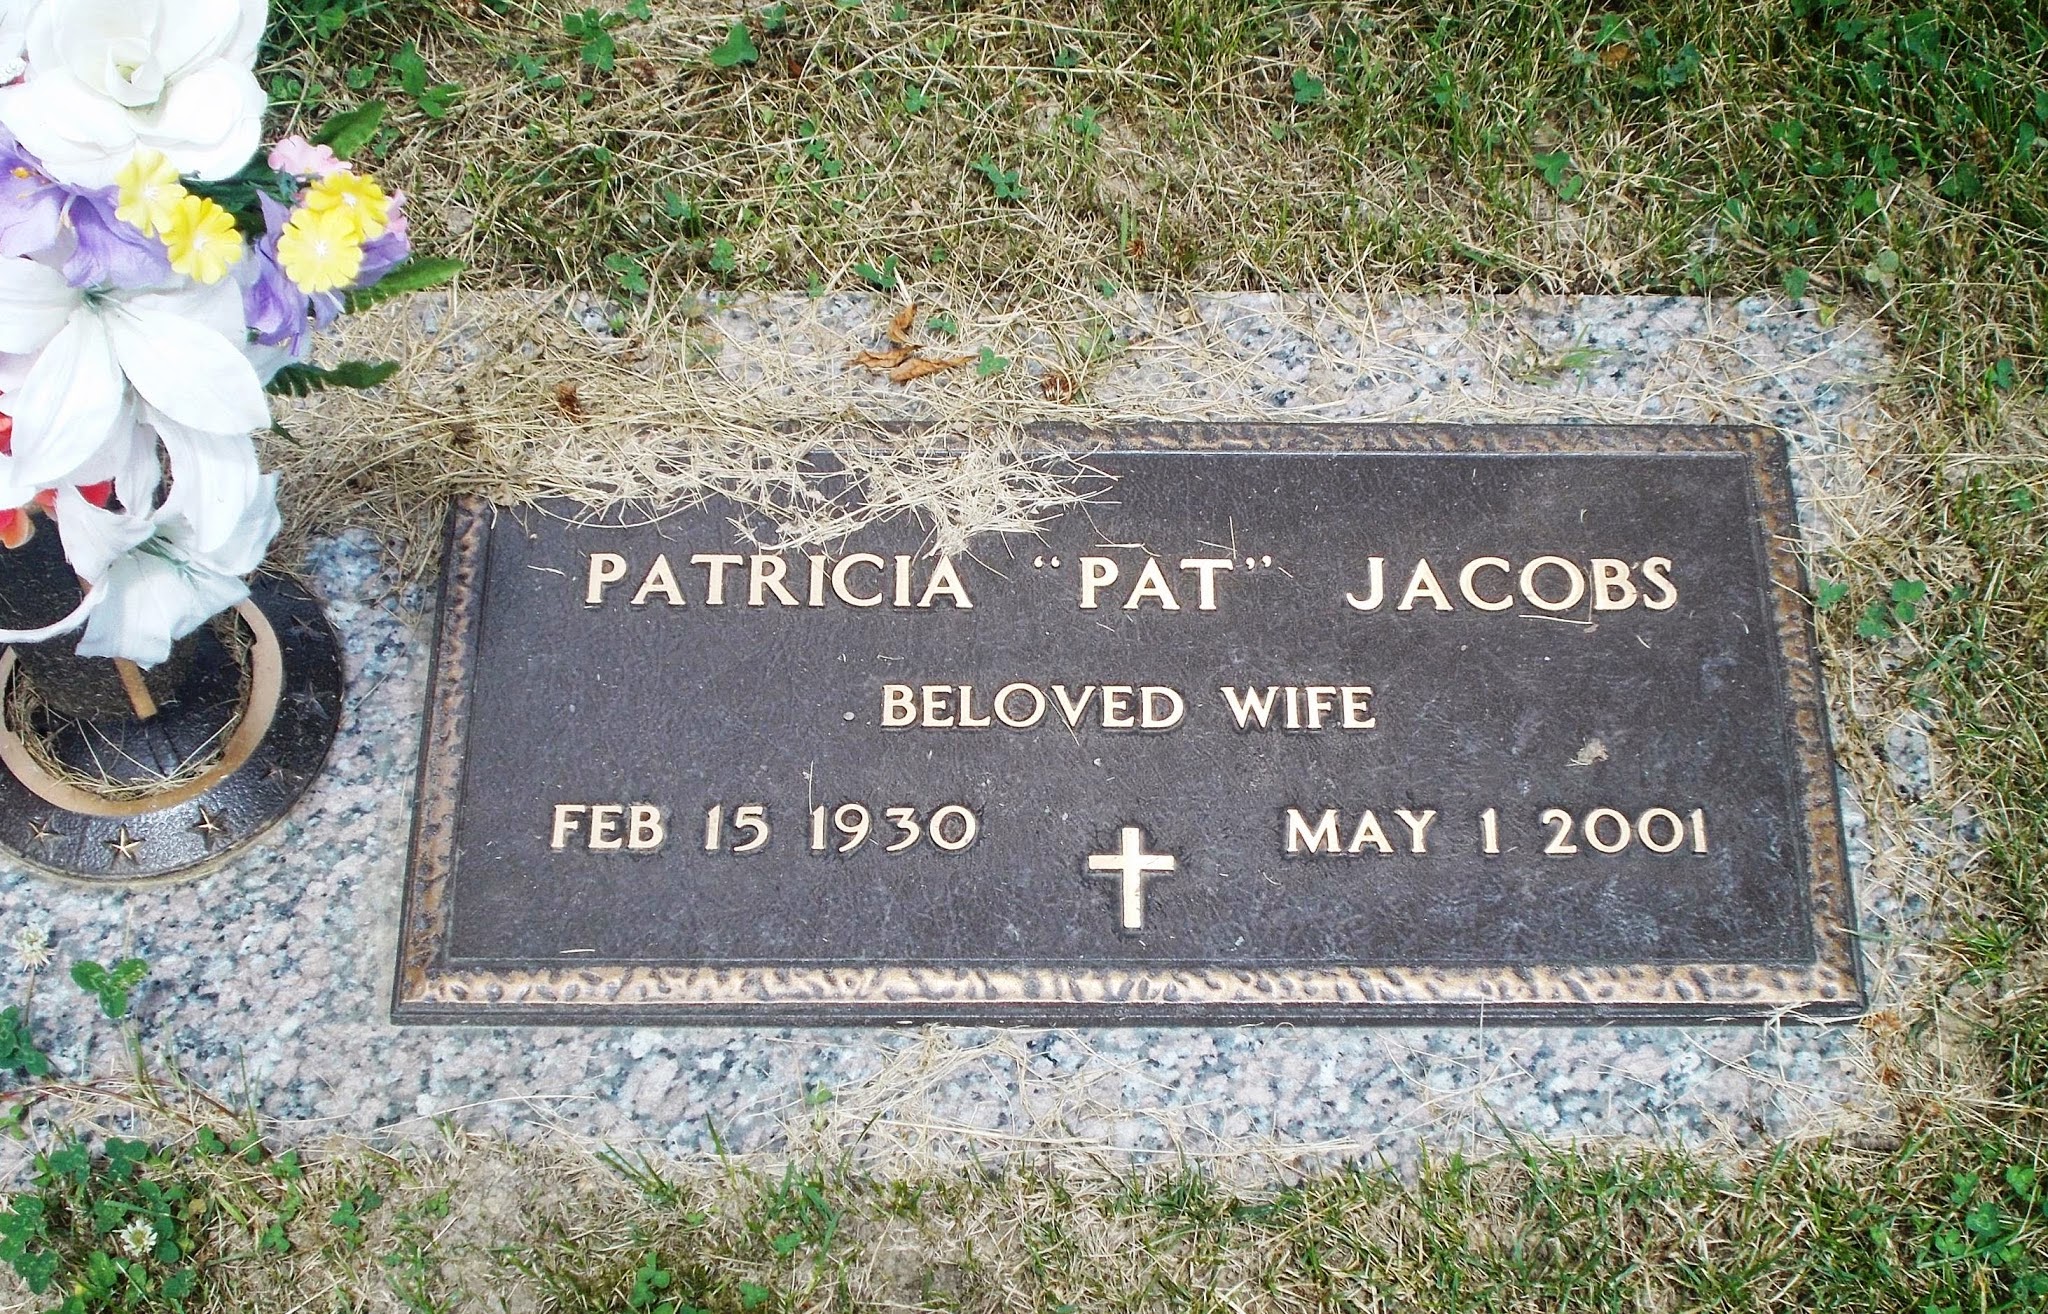 Patricia "Pat" Jacobs